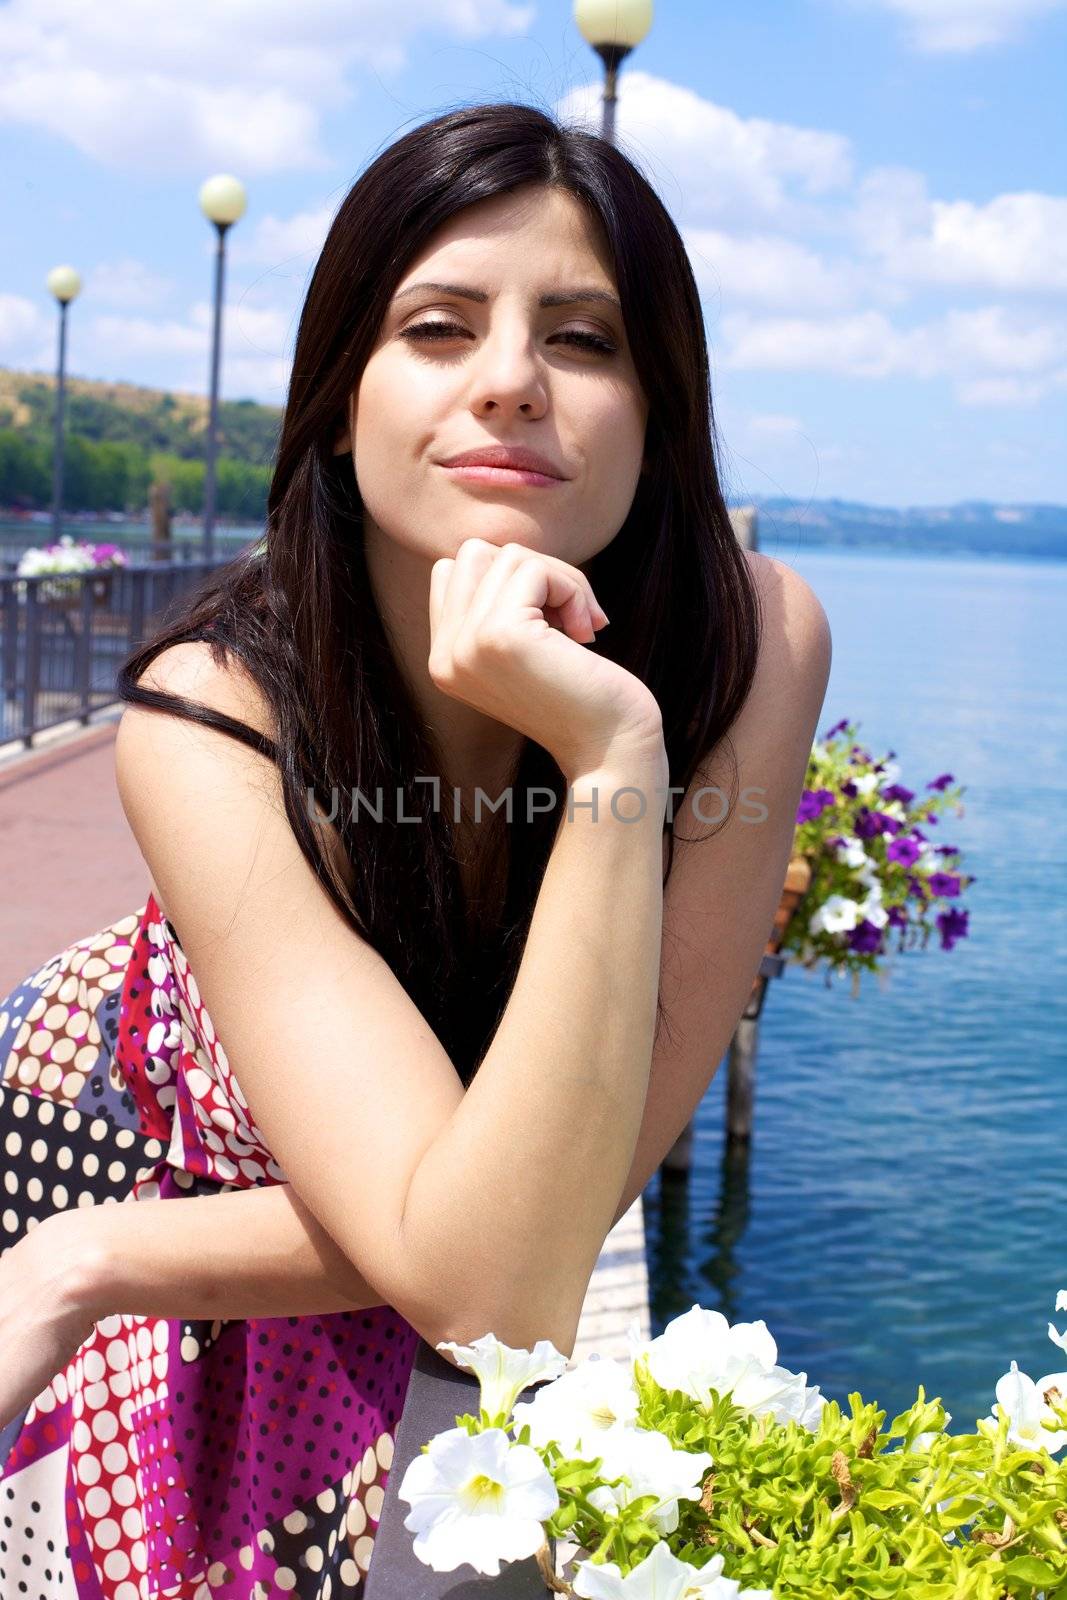 Heppy female model posing  in front of flowers on a italian lake by fmarsicano